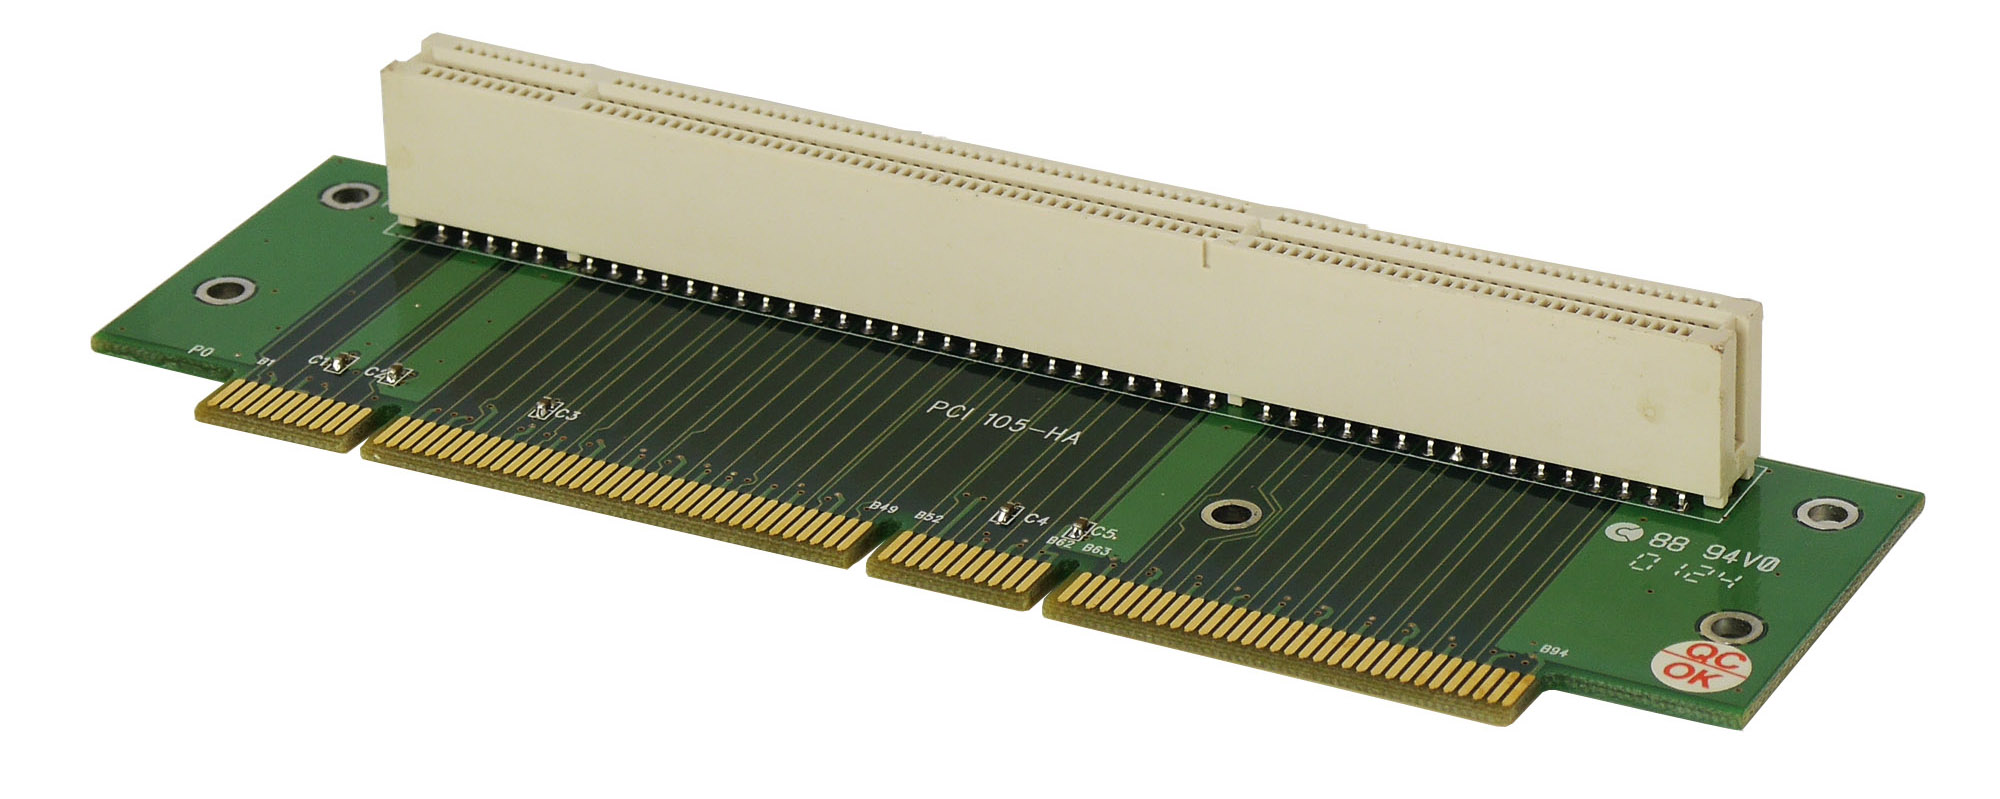 Pci definition. 32 Бит PCI слот. Слот шины PCI X/PCI-64. PCI 32-bit 33mhz платы расширения u2. Pci2pci-n03.